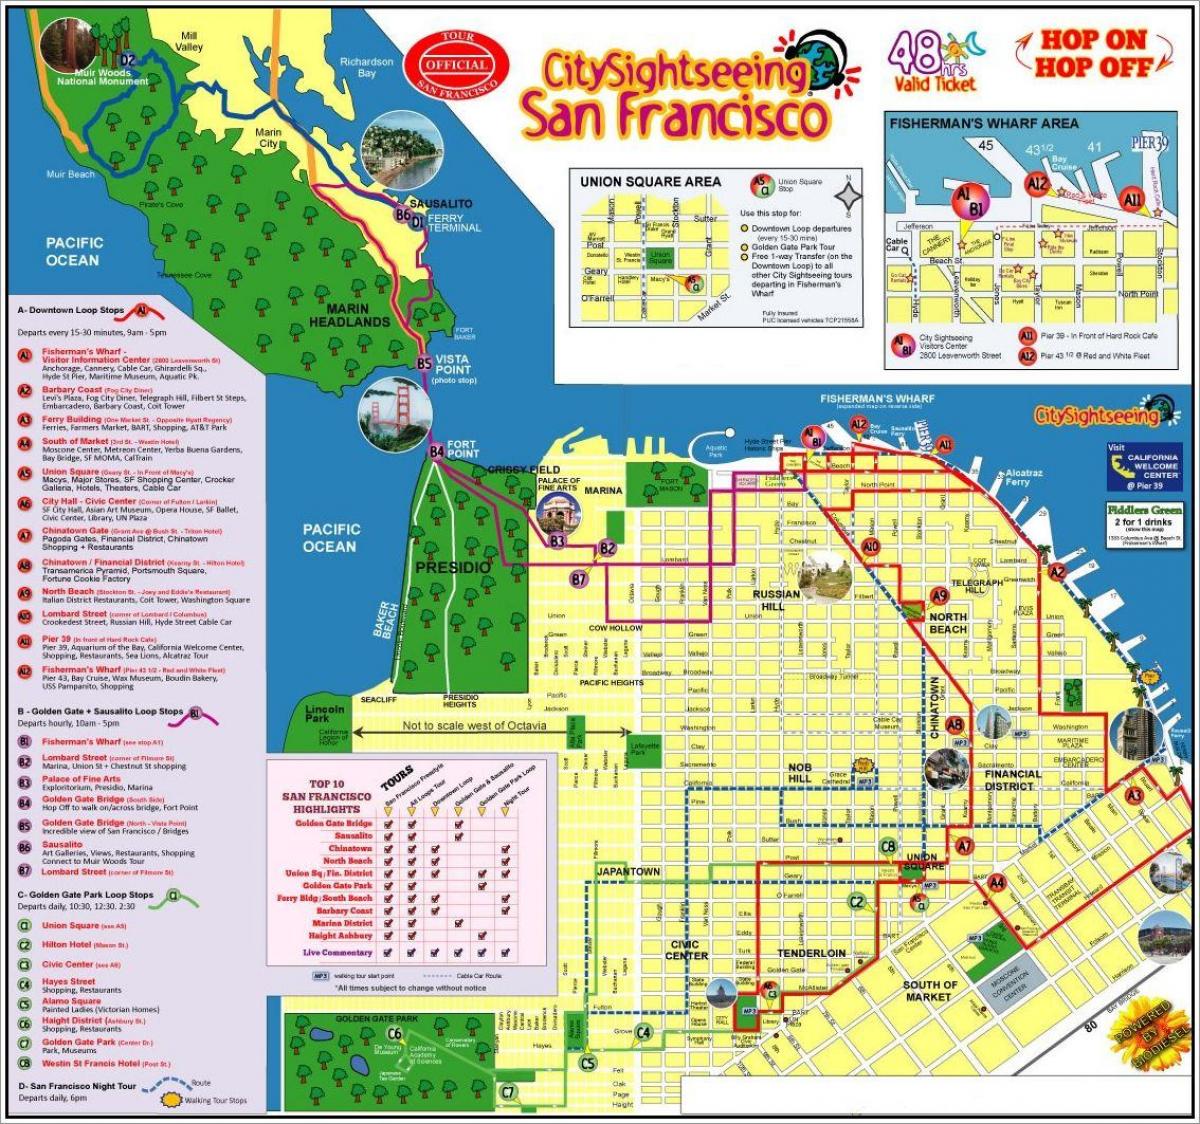 razgledavanje grada San Francisco na karti